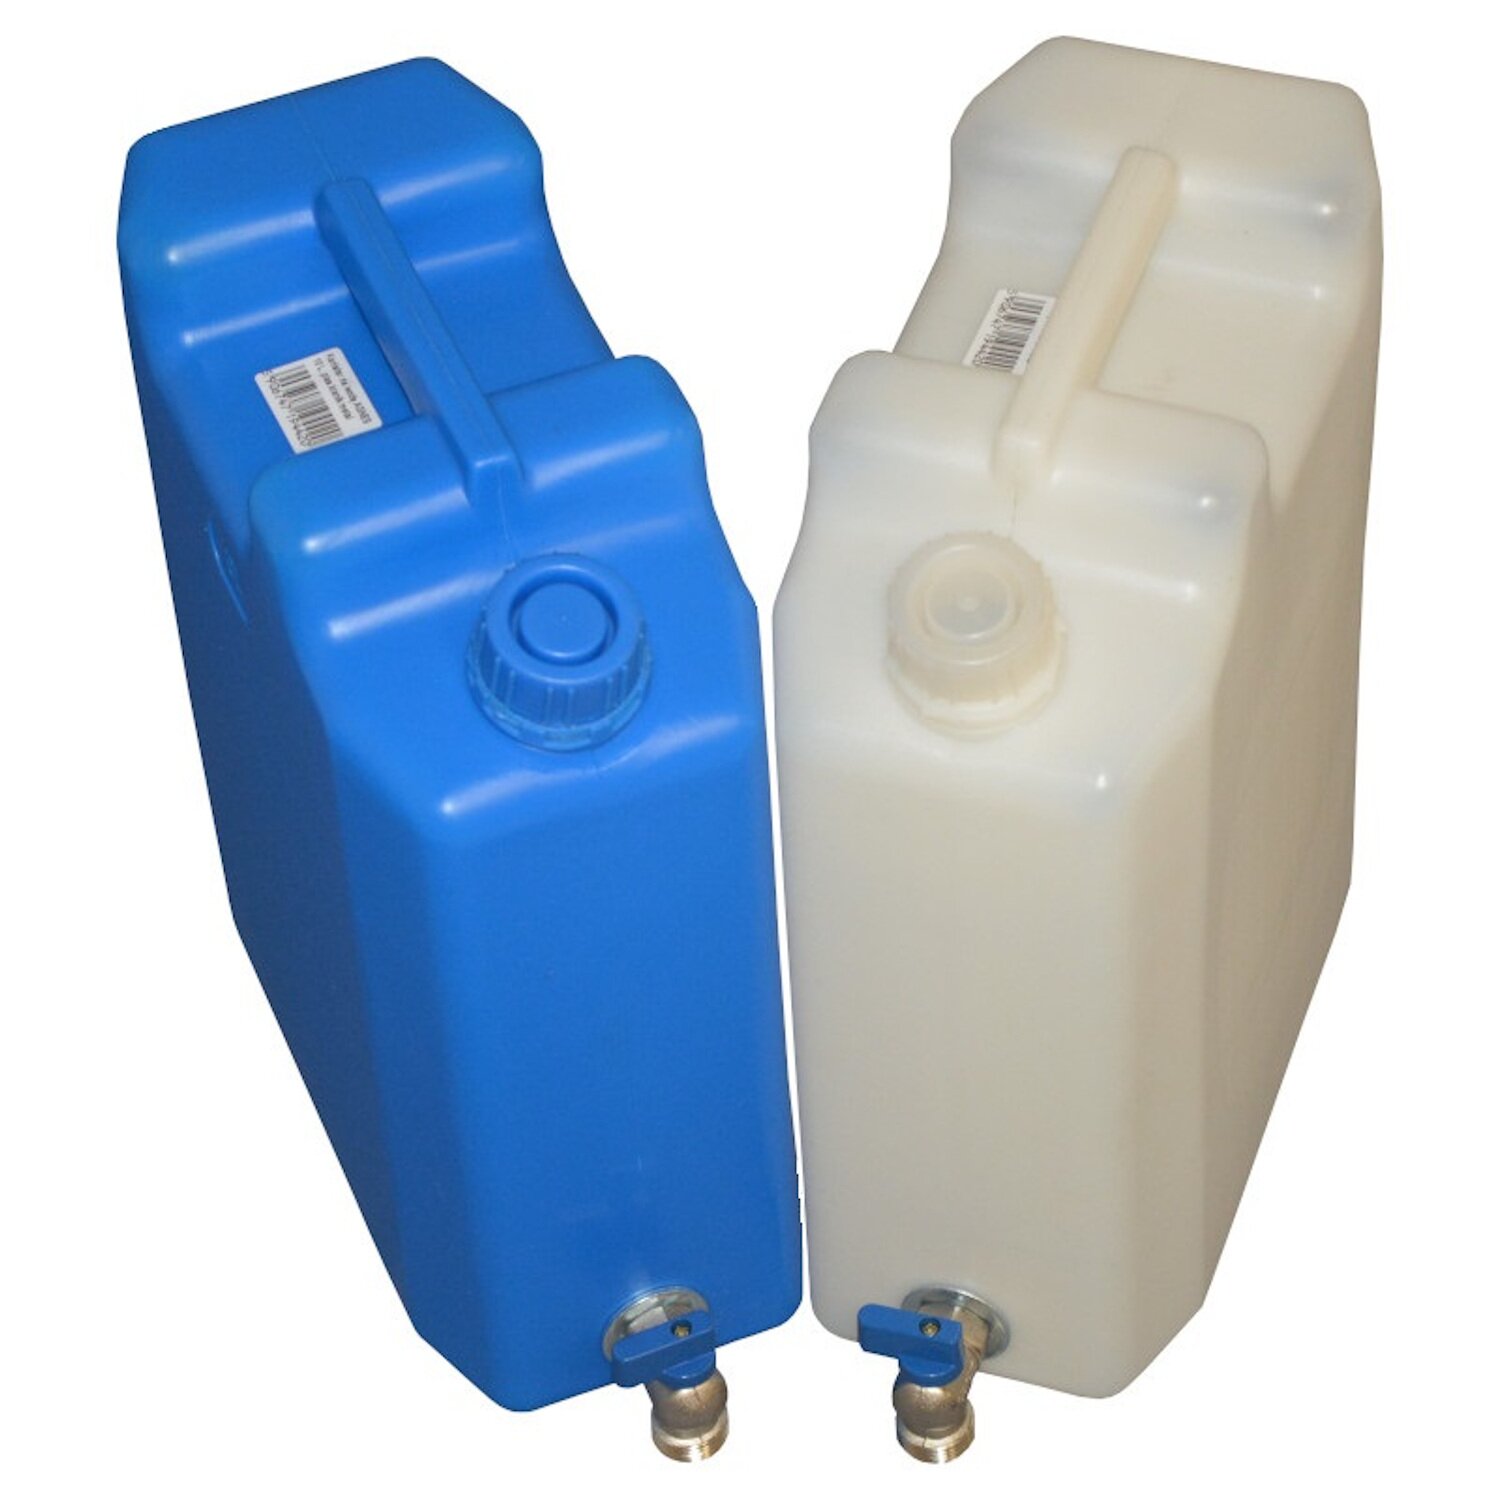 Preiswert&Gut Kunststoff Wasserbehälter Wasserkanister Metall Hahn 10L  Wasser Kanister Camping